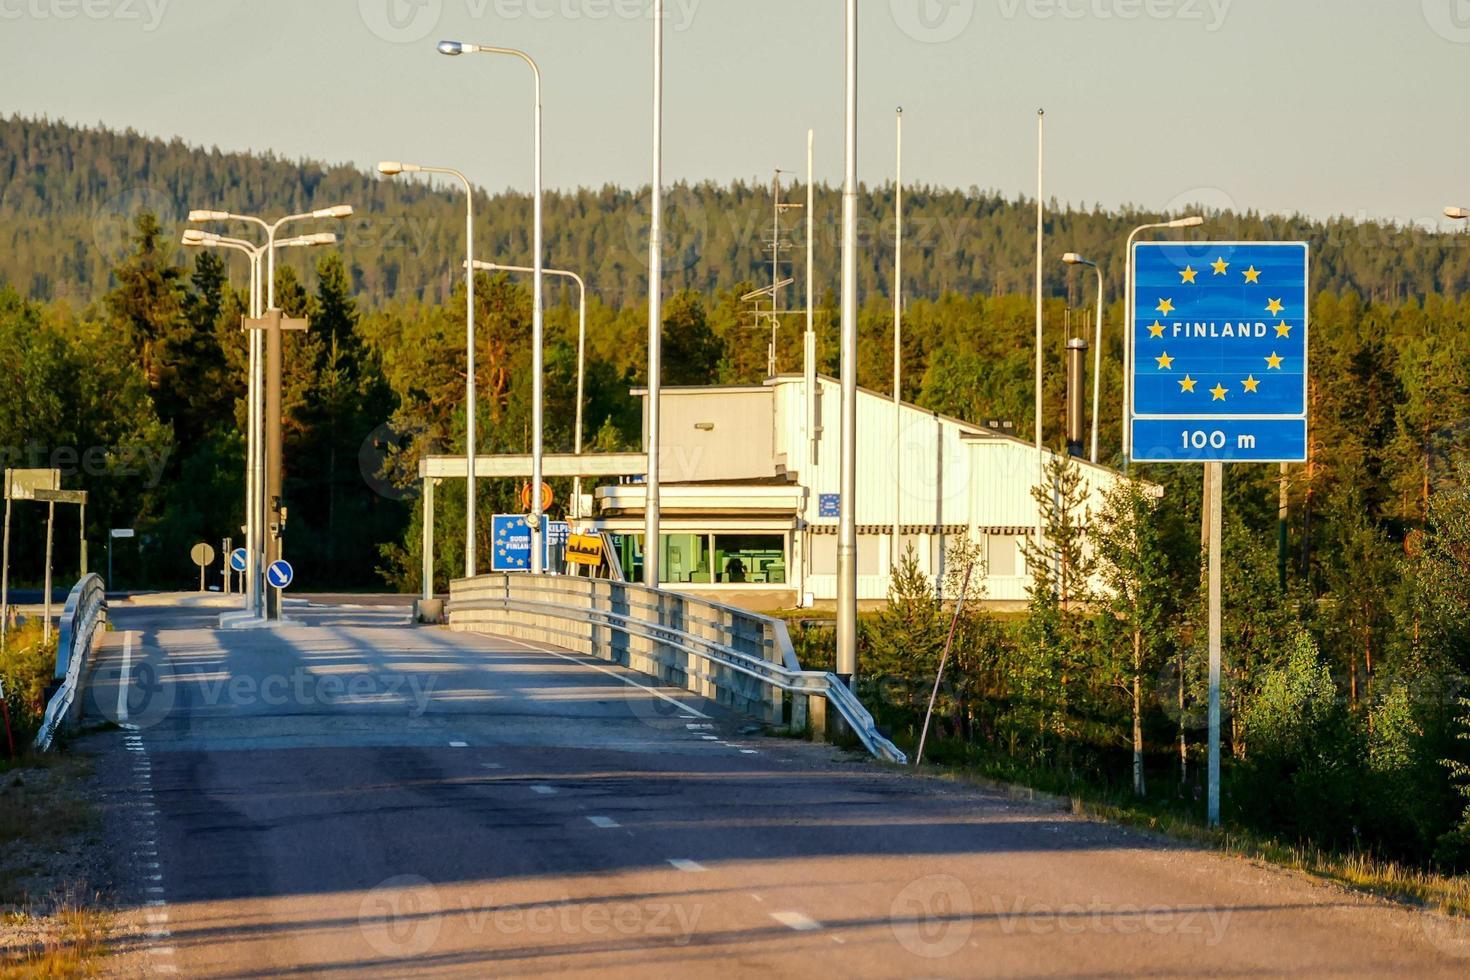 Finland Border Road sign photo